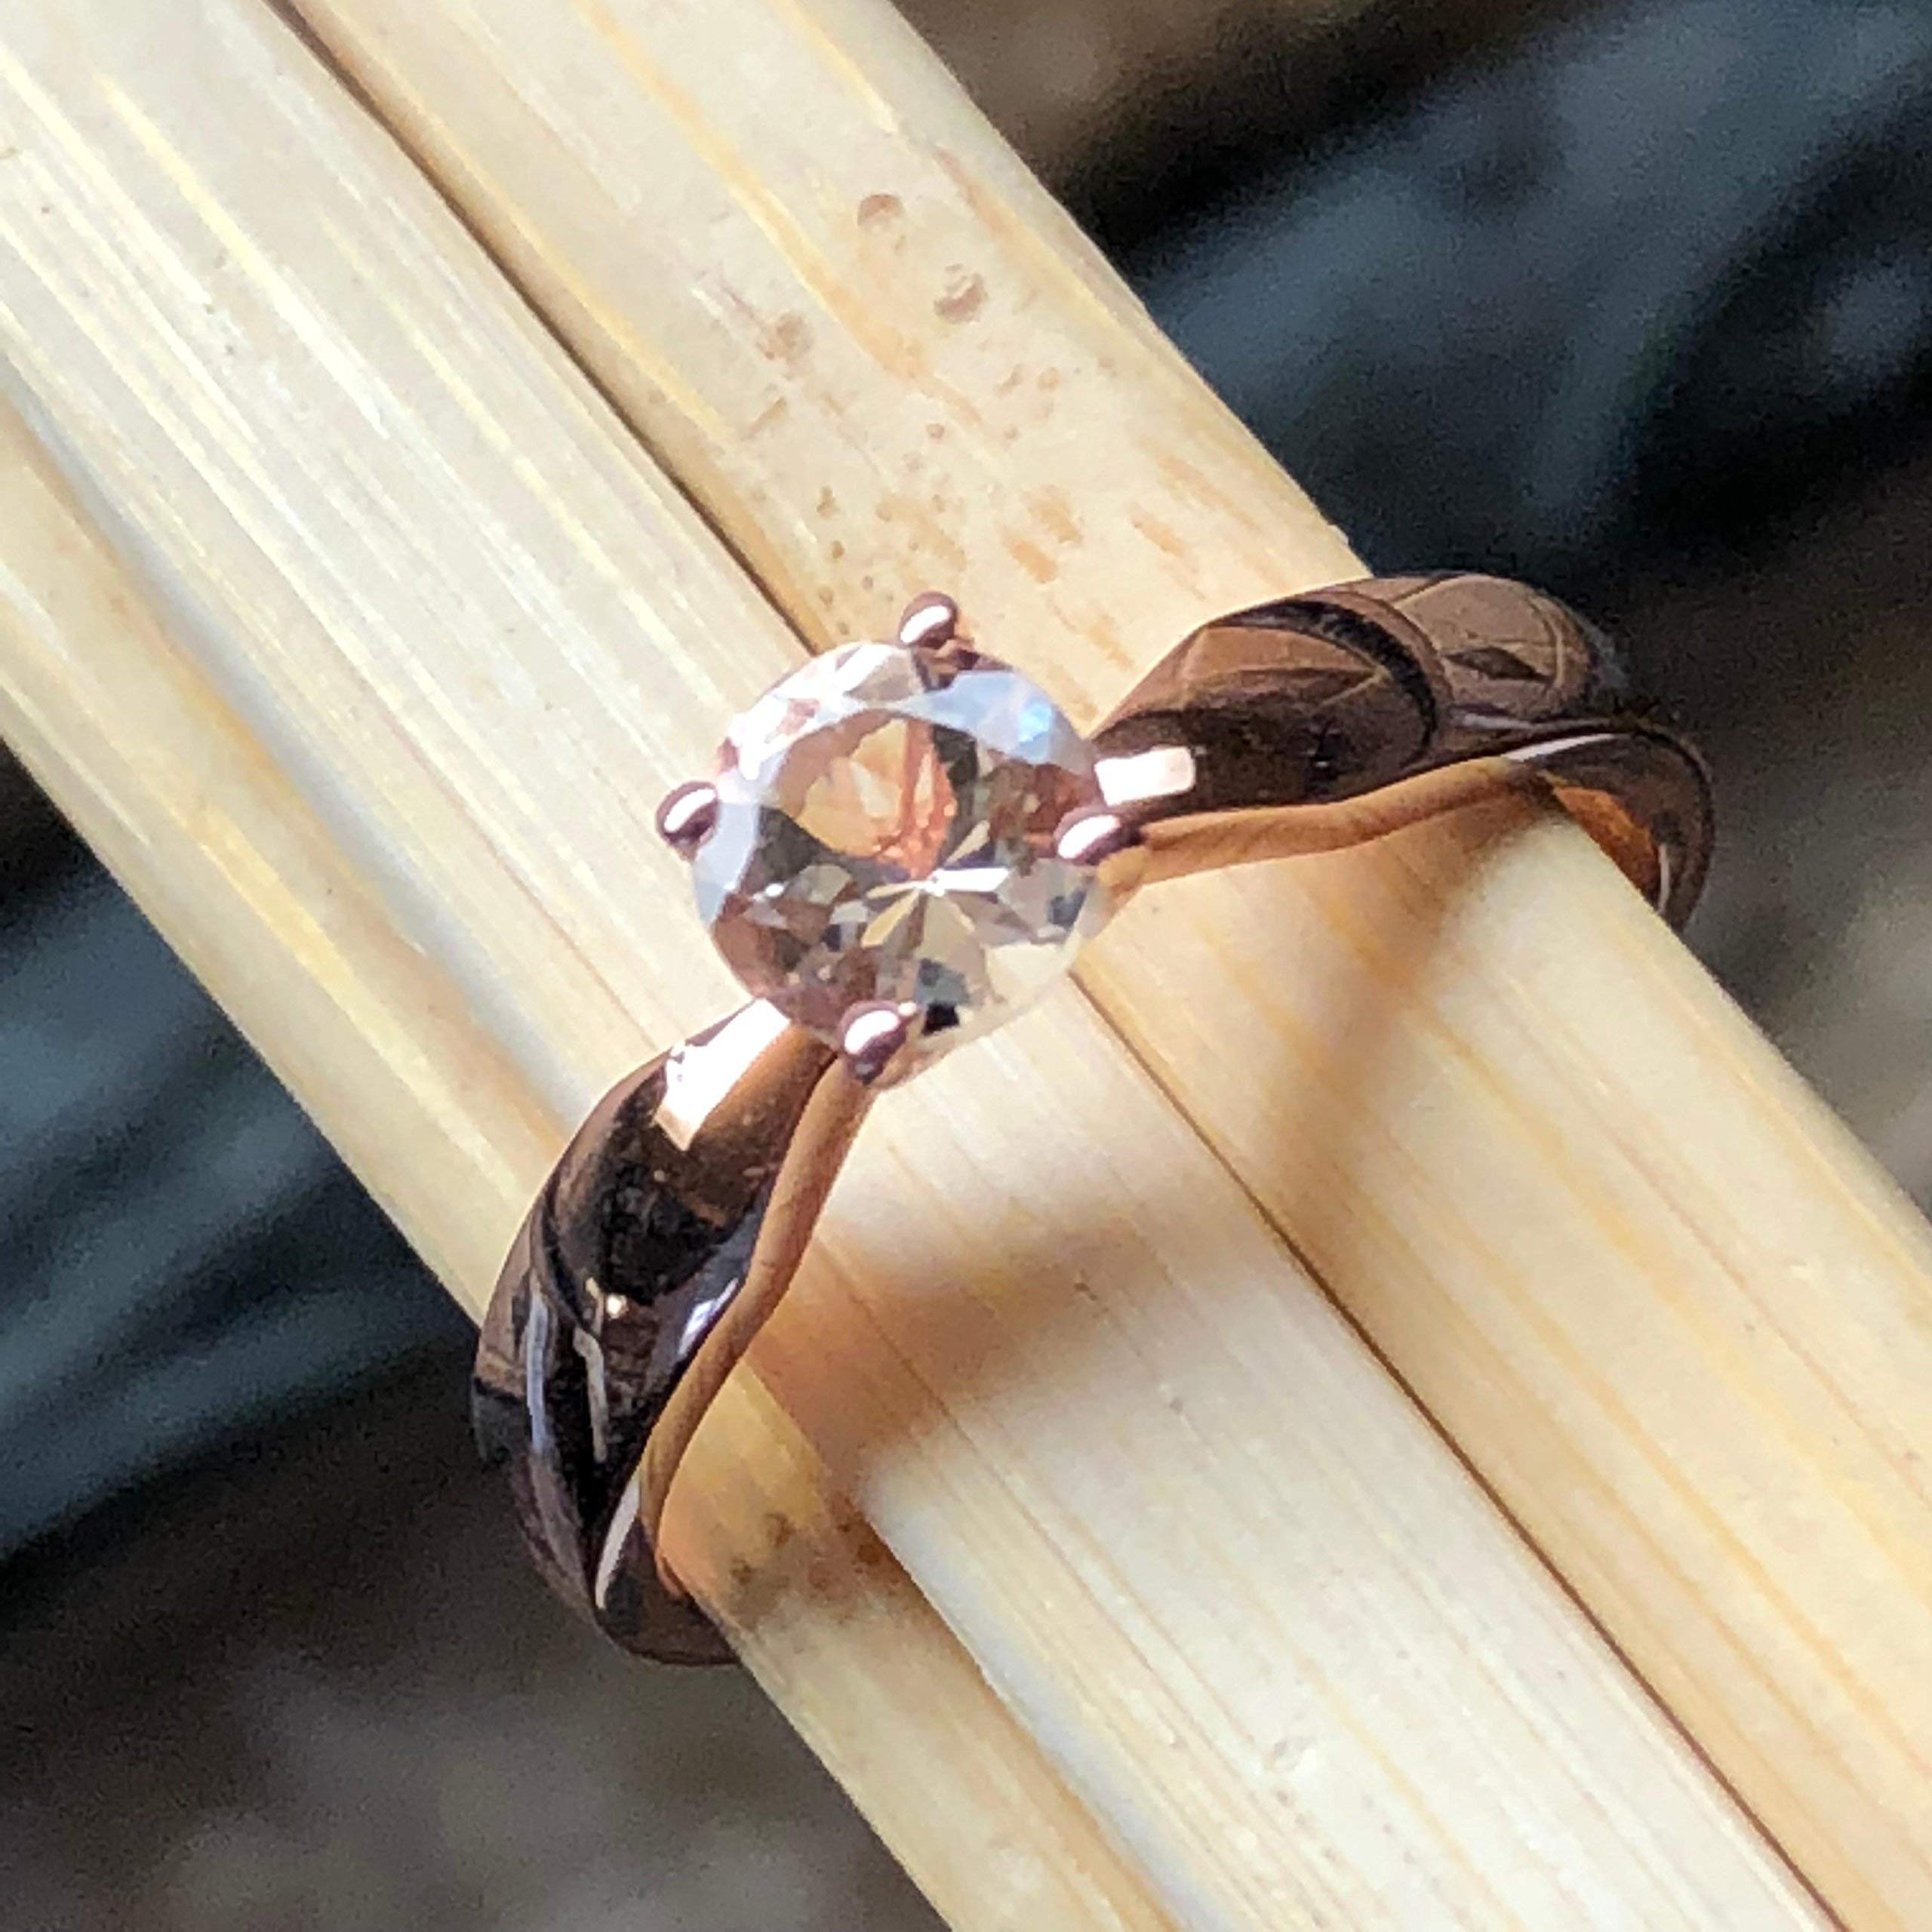 Natural Peach Morganite 14k Rose Gold Over Sterling Silver Engagement Ring Size 6, 7, 8, 9 - Natural Rocks by Kala